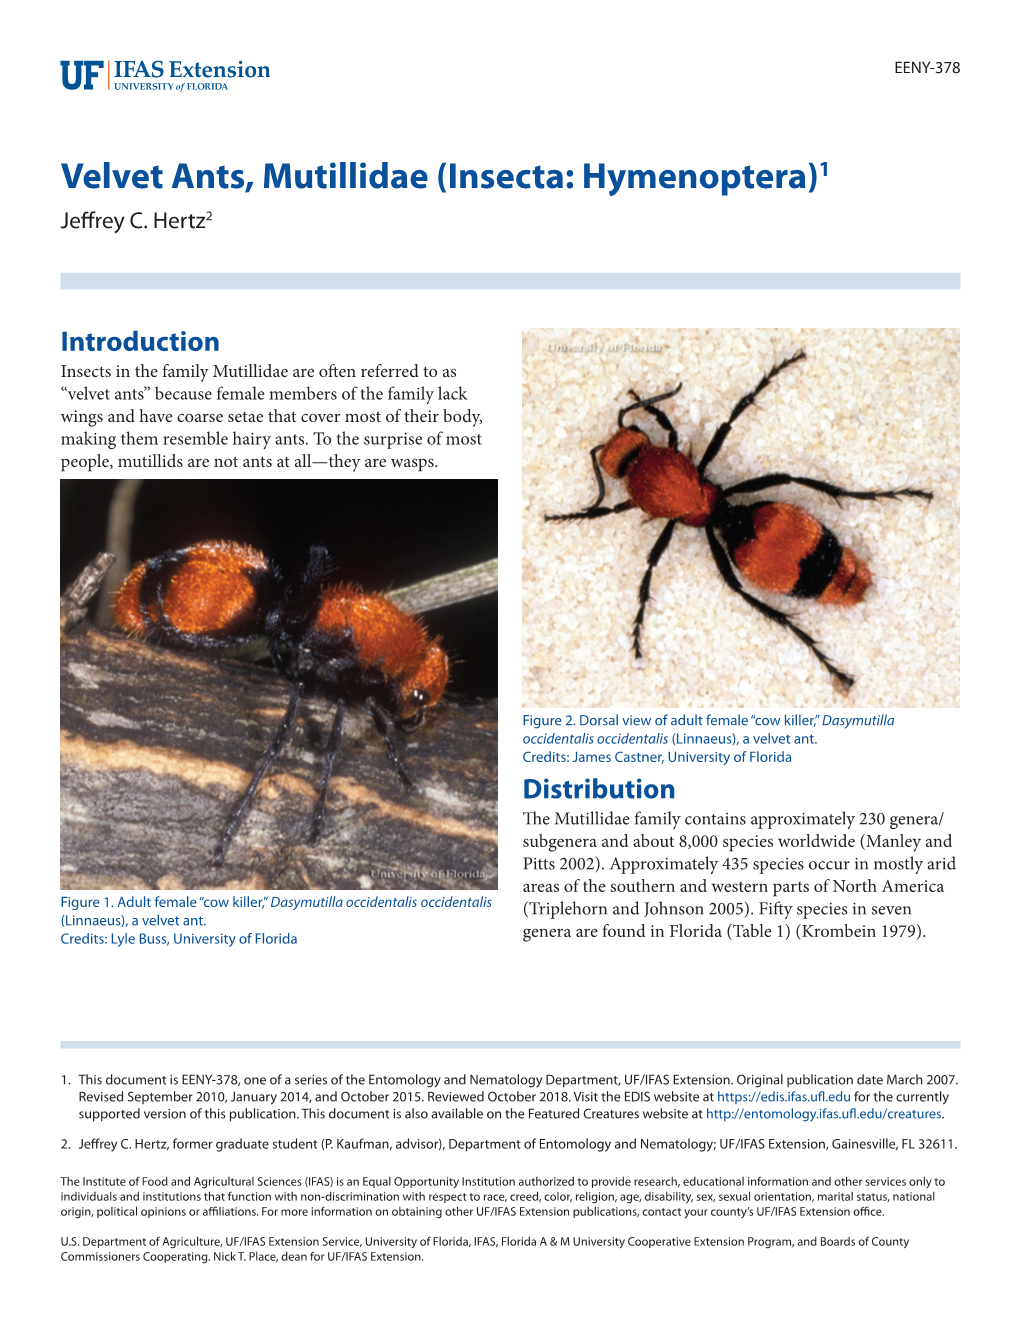 Velvet Ants, Mutillidae (Insecta: Hymenoptera)1 Jeffrey C